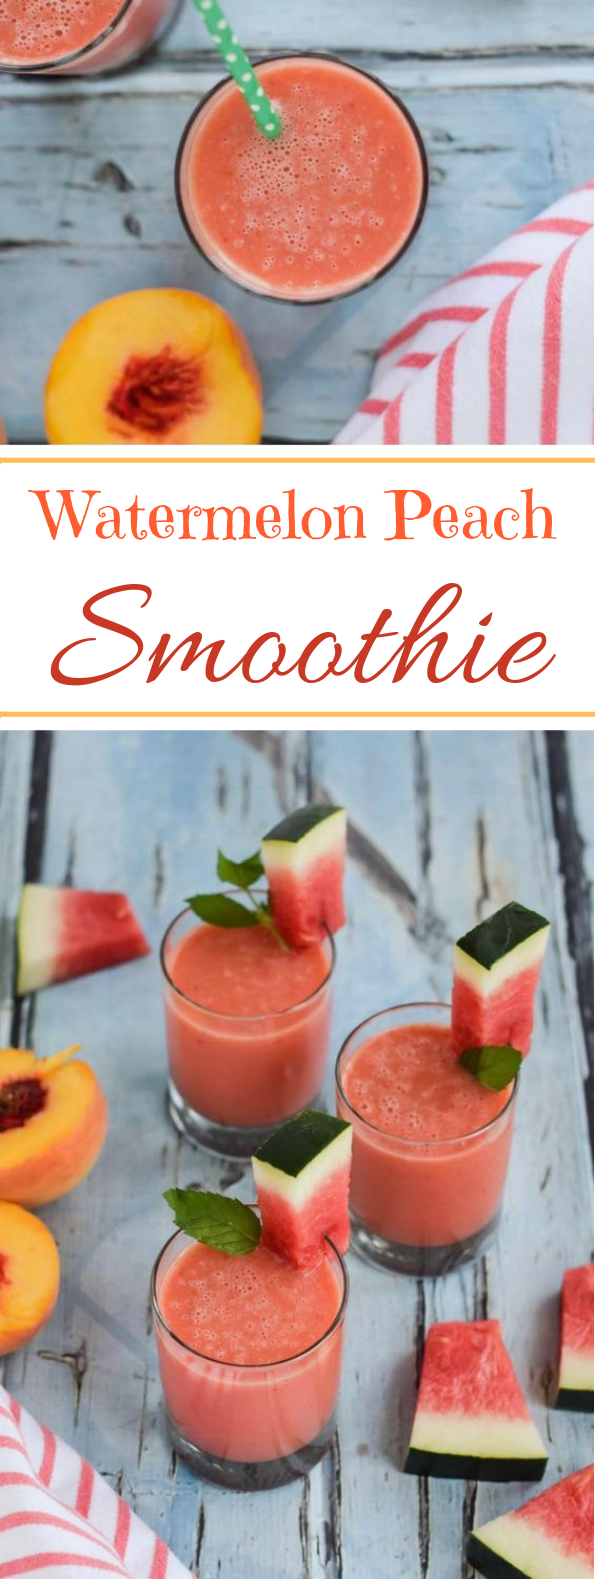 Watermelon Peach Smoothie #drinks #smoothies